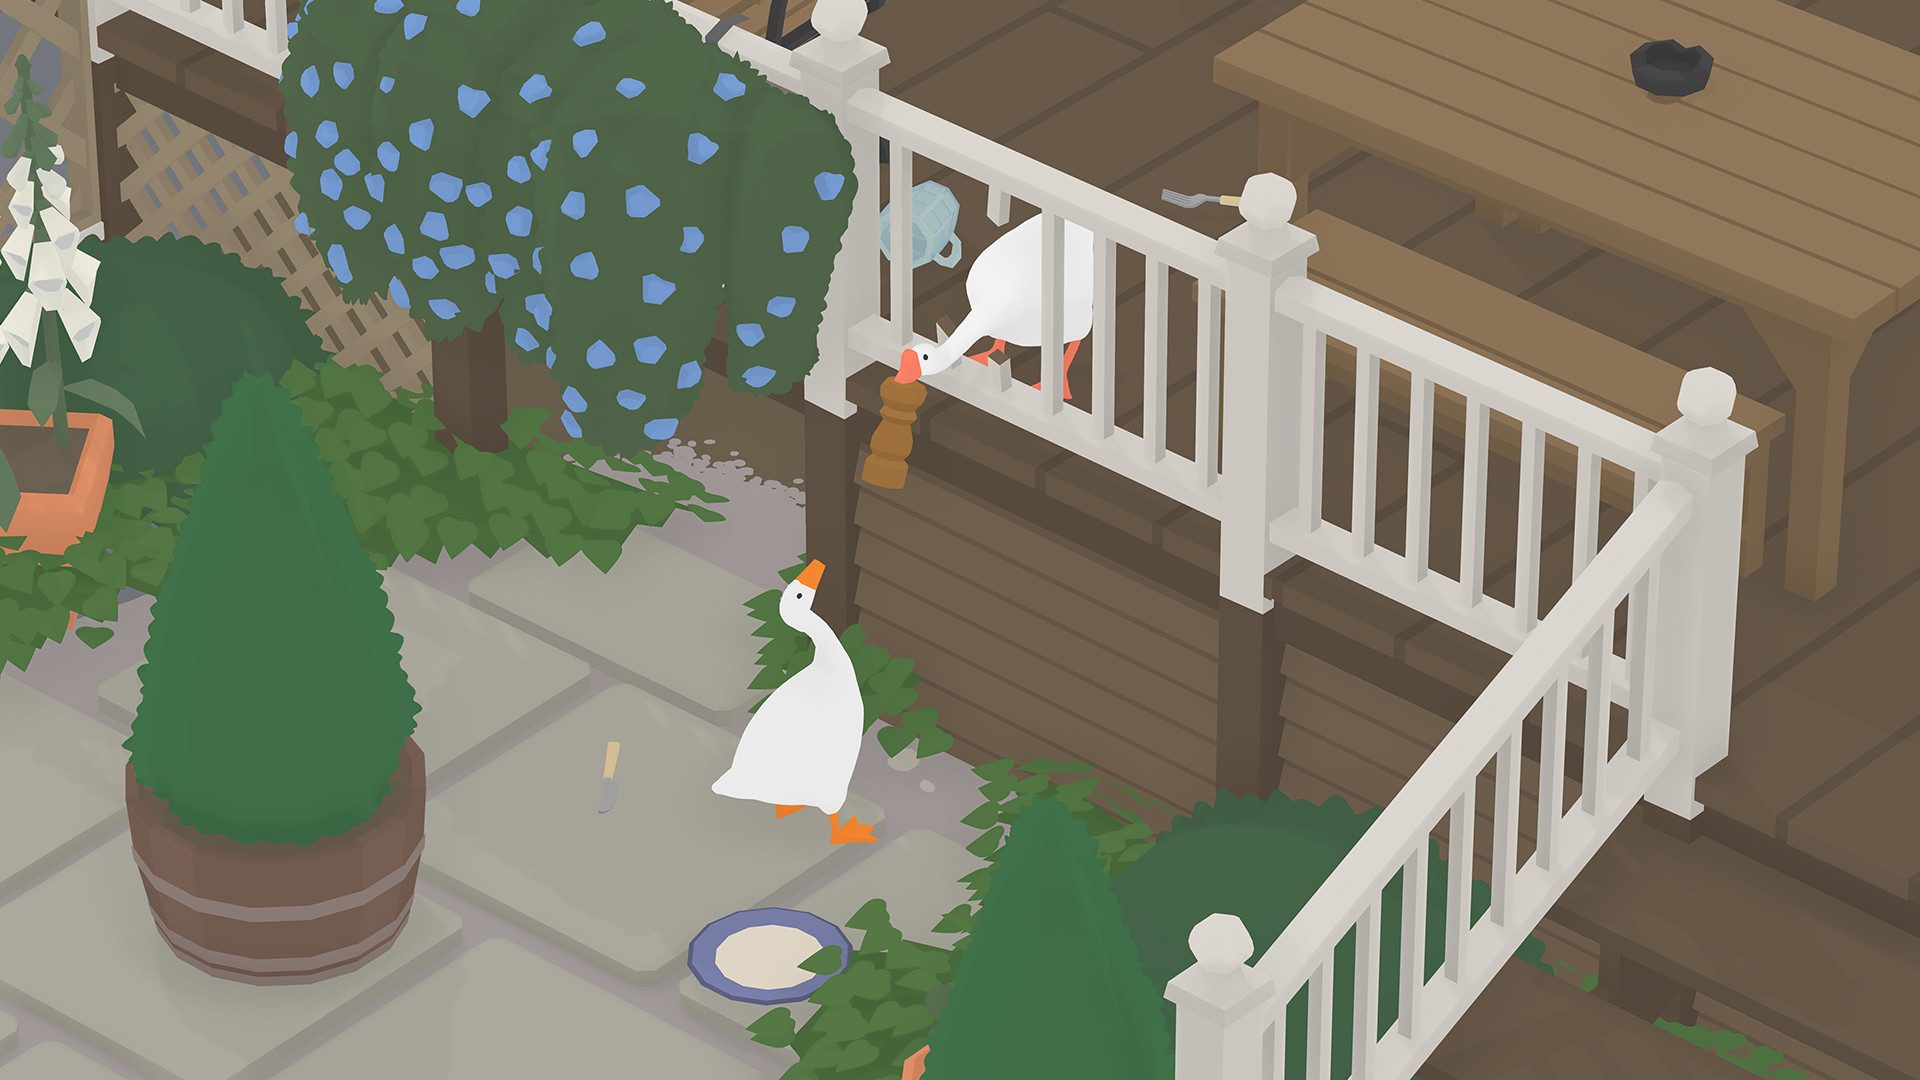 Untitled Goose Game - скриншот игры 3